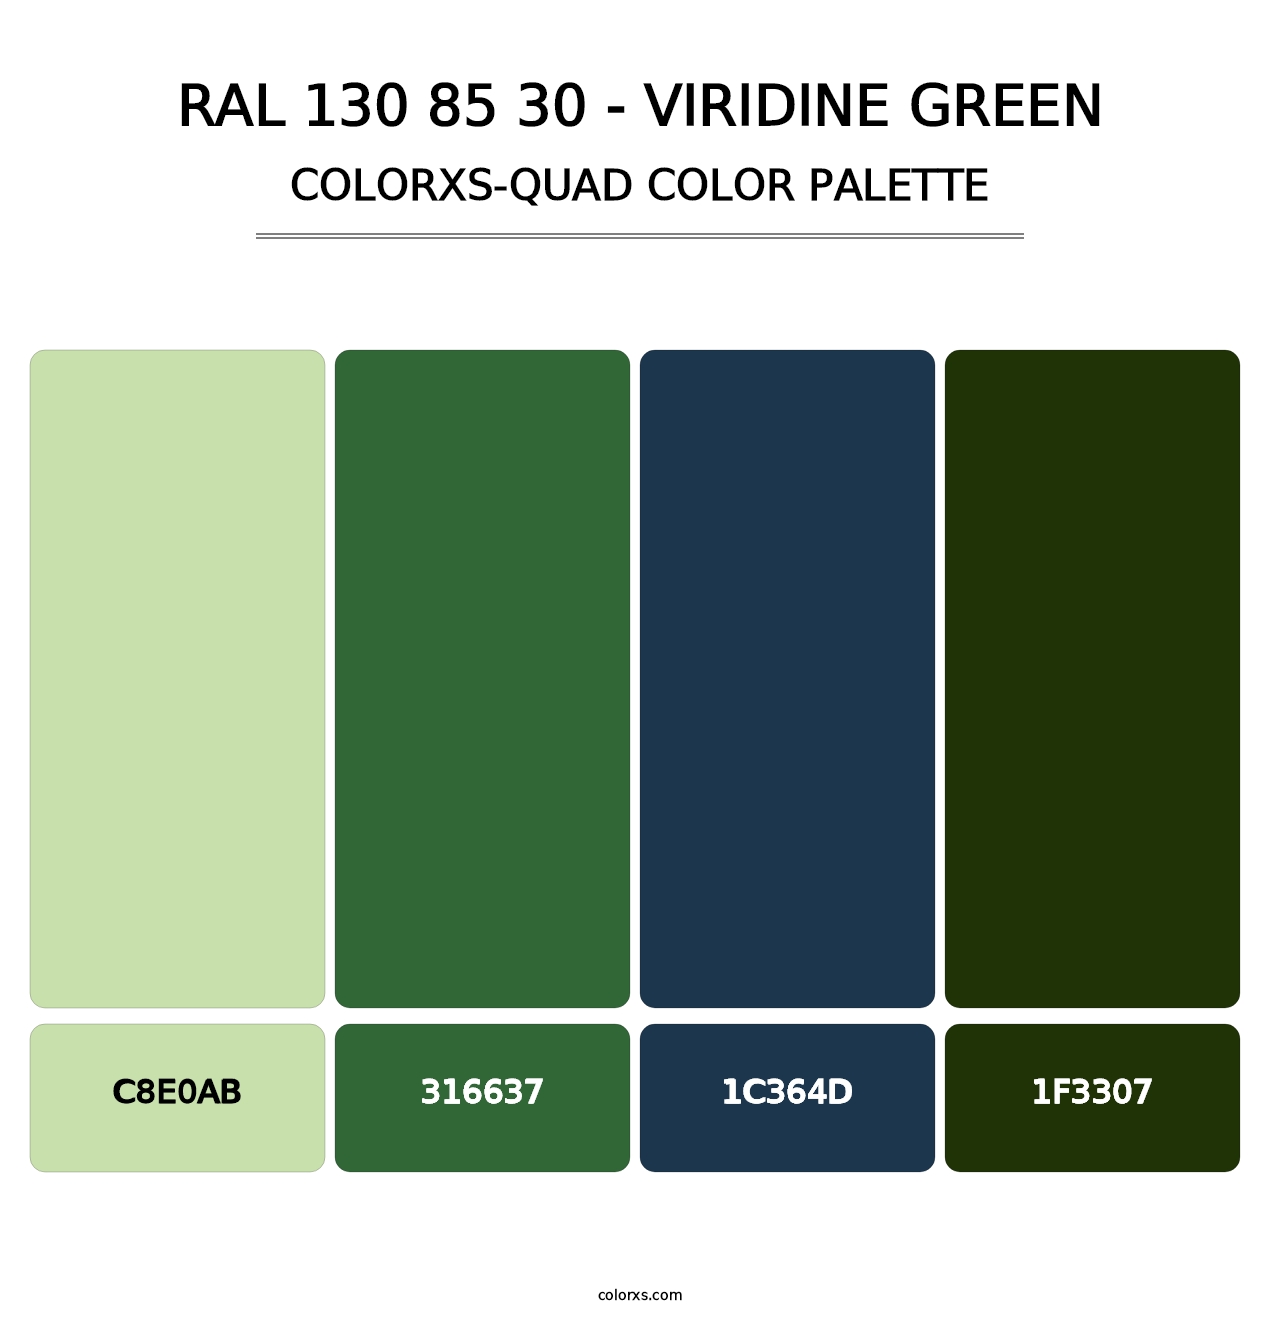 RAL 130 85 30 - Viridine Green - Colorxs Quad Palette